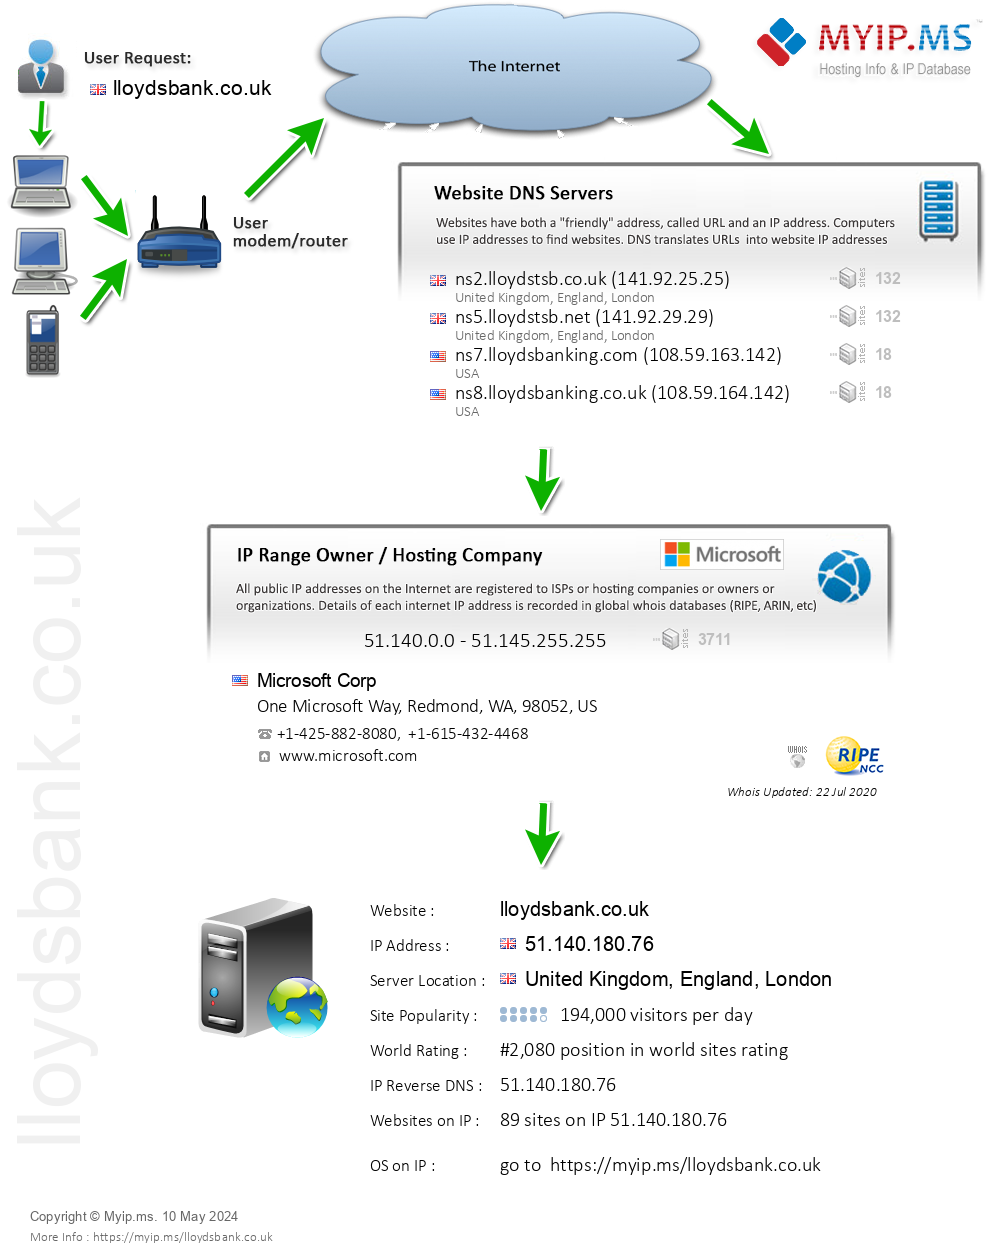 Lloydsbank.co.uk - Website Hosting Visual IP Diagram